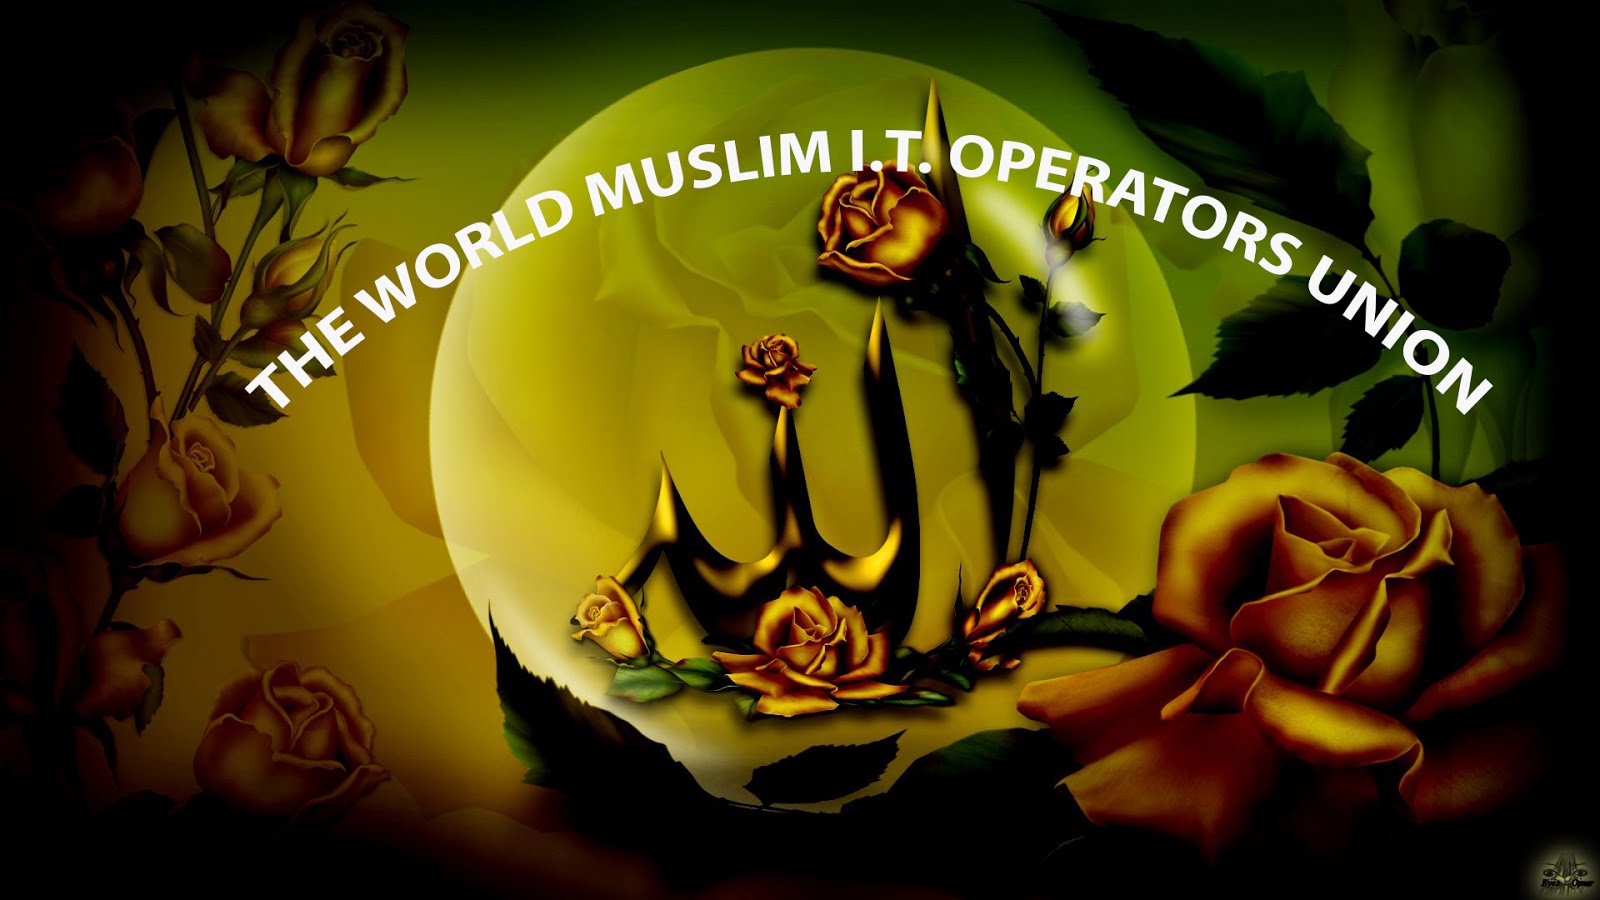 World Muslim I.T. Operators Union